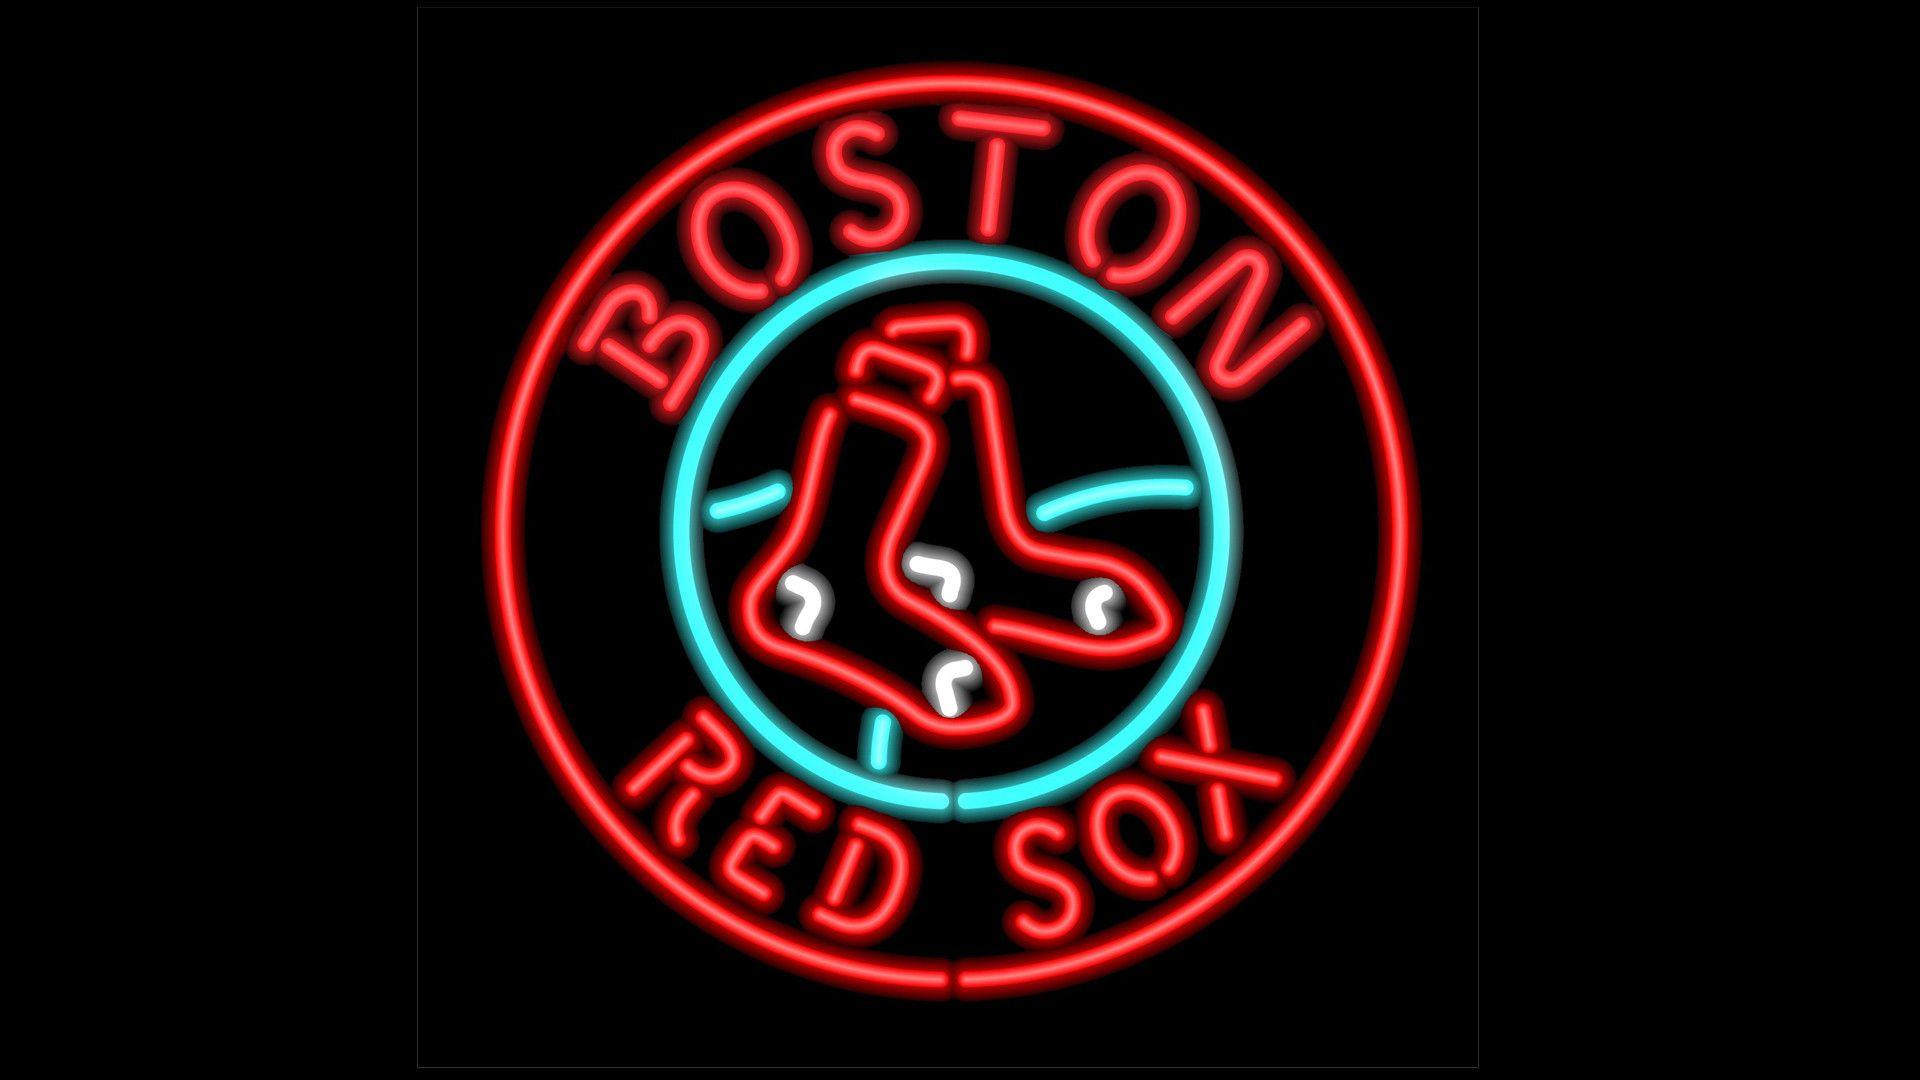 Boston Red Sox 2018 Wallpaper